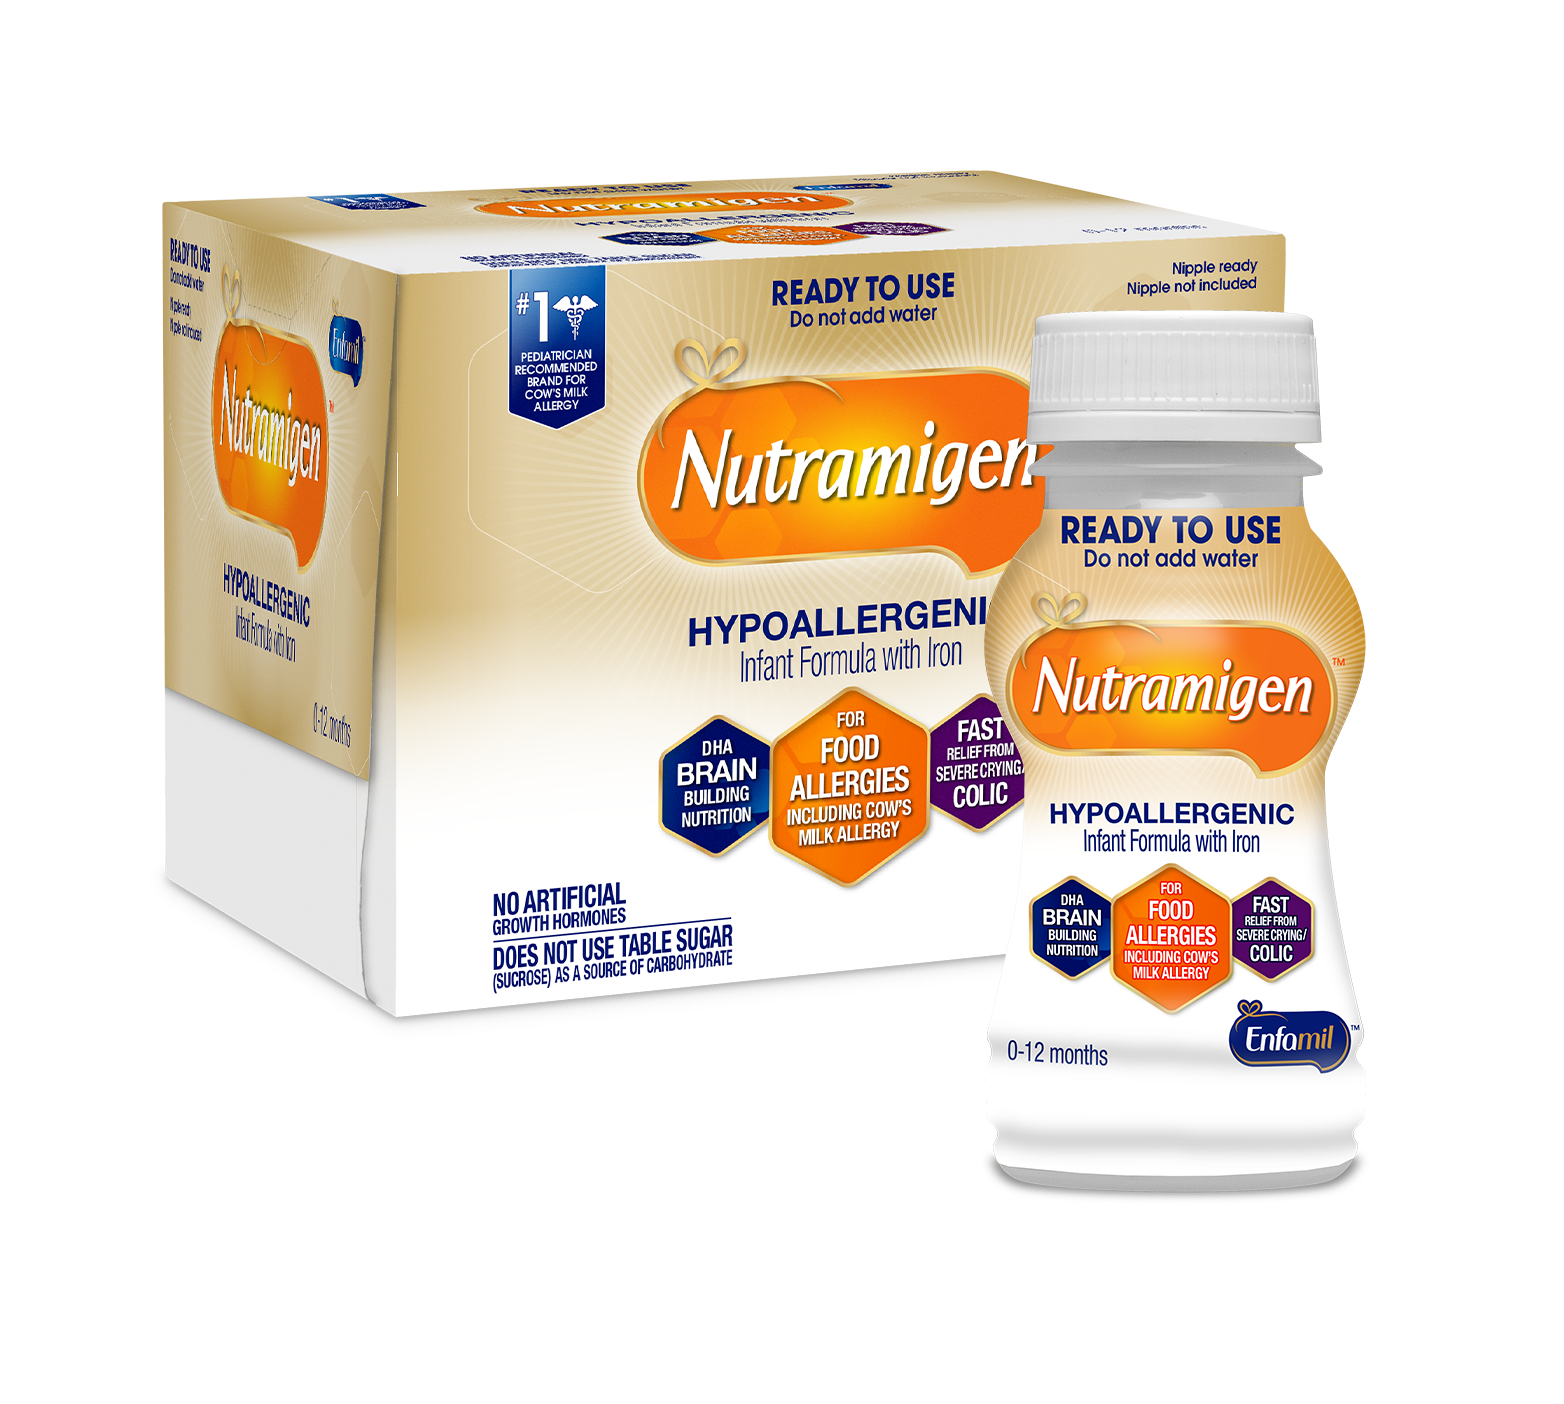 Enfamil Nutramigen Hypoallergenic Infant Formula with Iron Nursette Bottle, Ready-to-Use Liquid, 898301, 2 oz. - Pack of 6